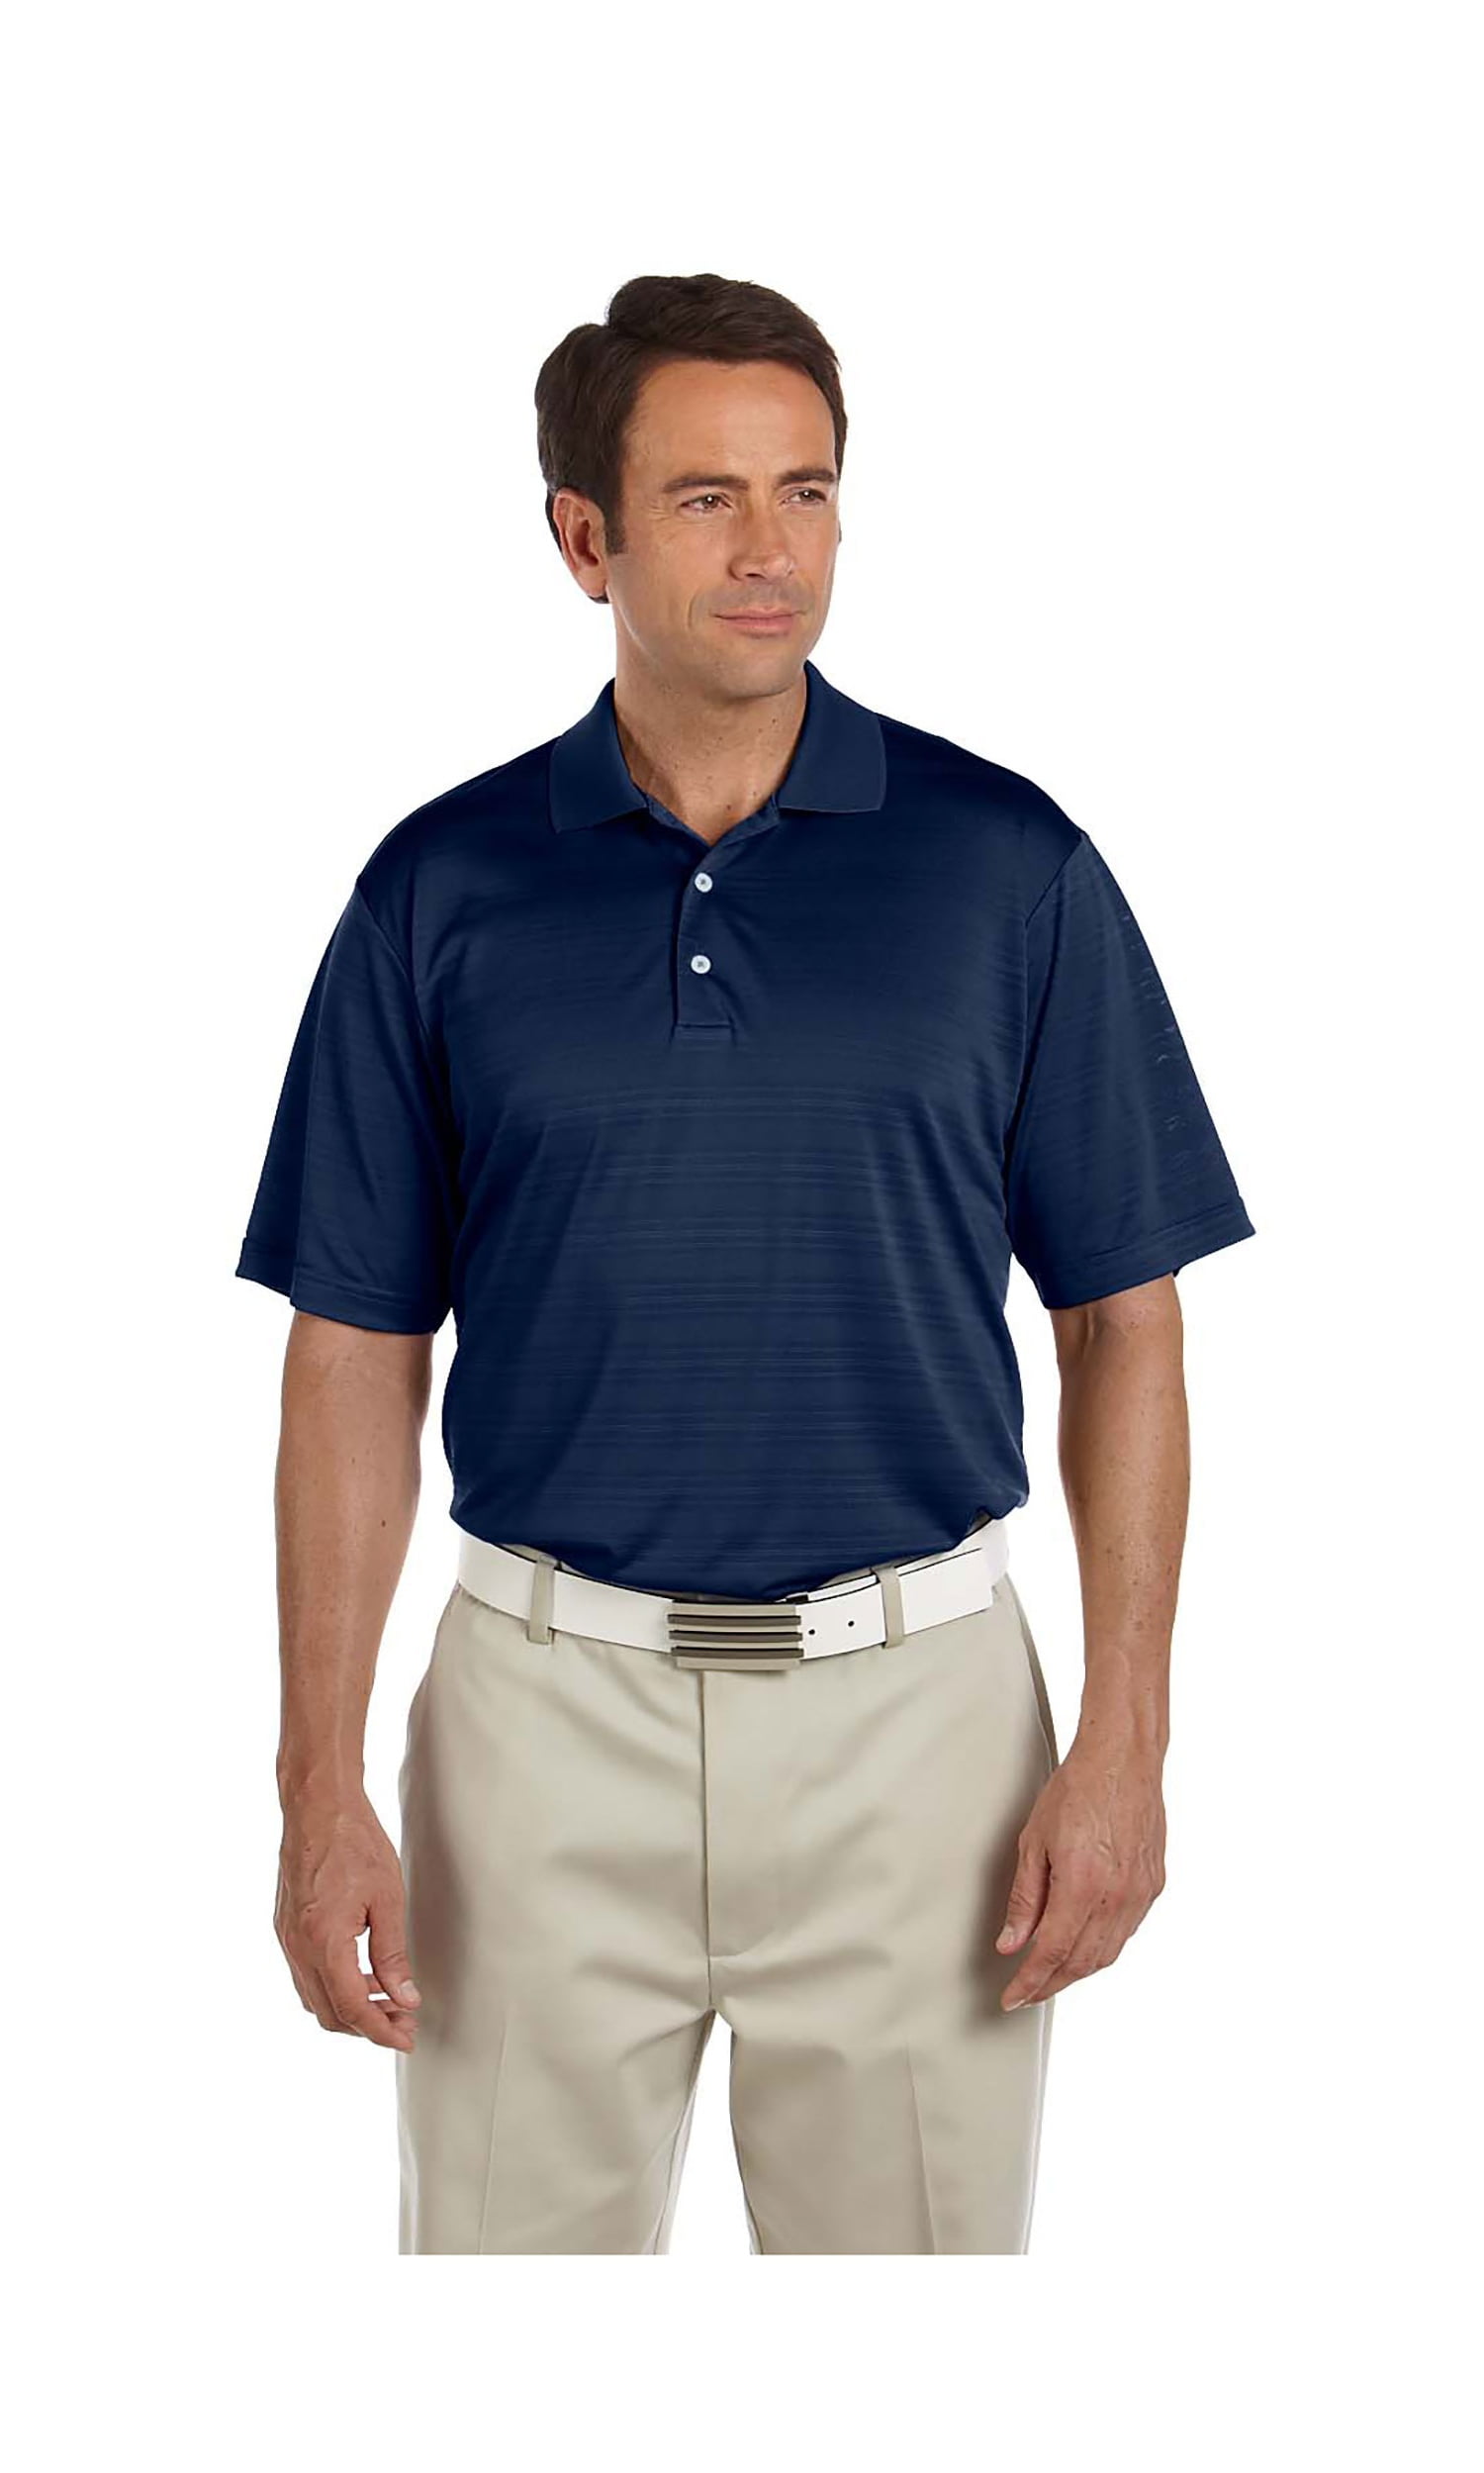 Adidas - Adidas Men's ClimaLite Side-SeaMedium Polo Shirt, Style A161